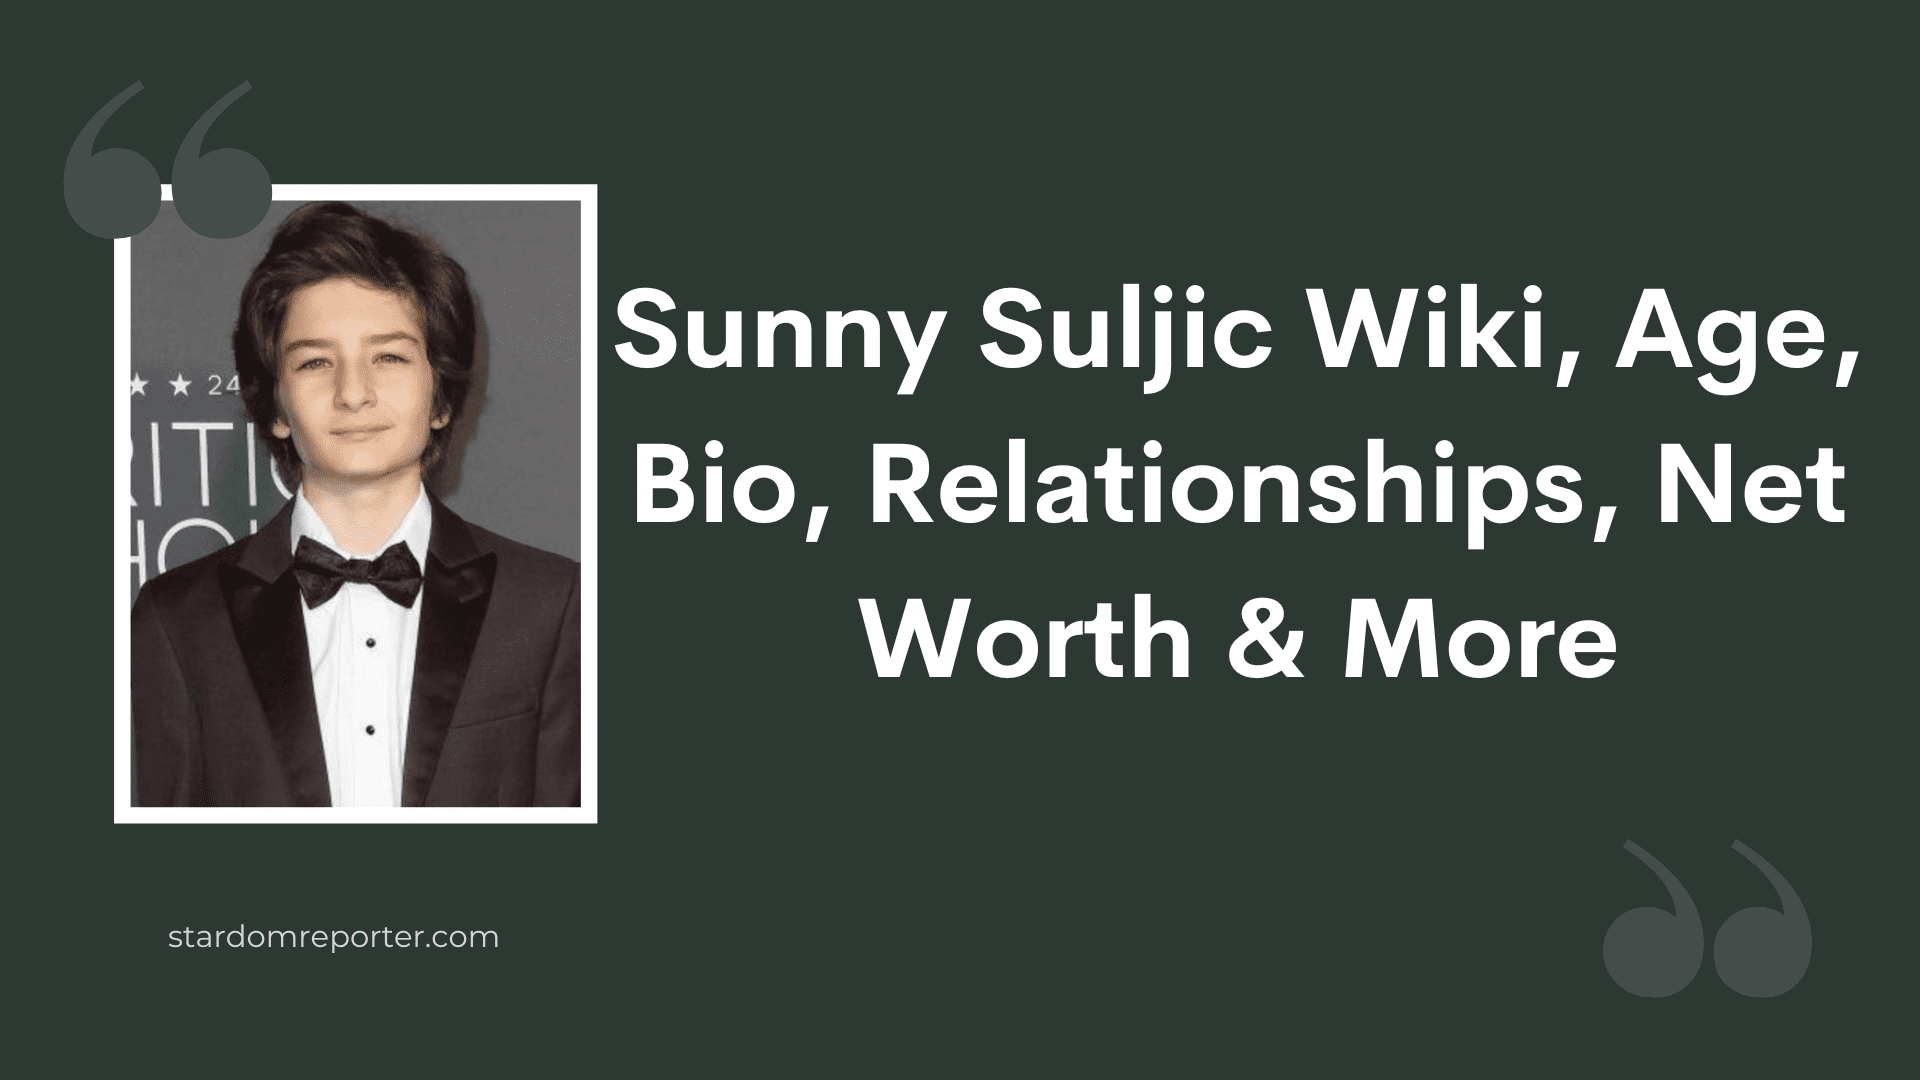 Sunny Suljic Wiki, Age, Bio, Relationships, Net Worth & More - 7